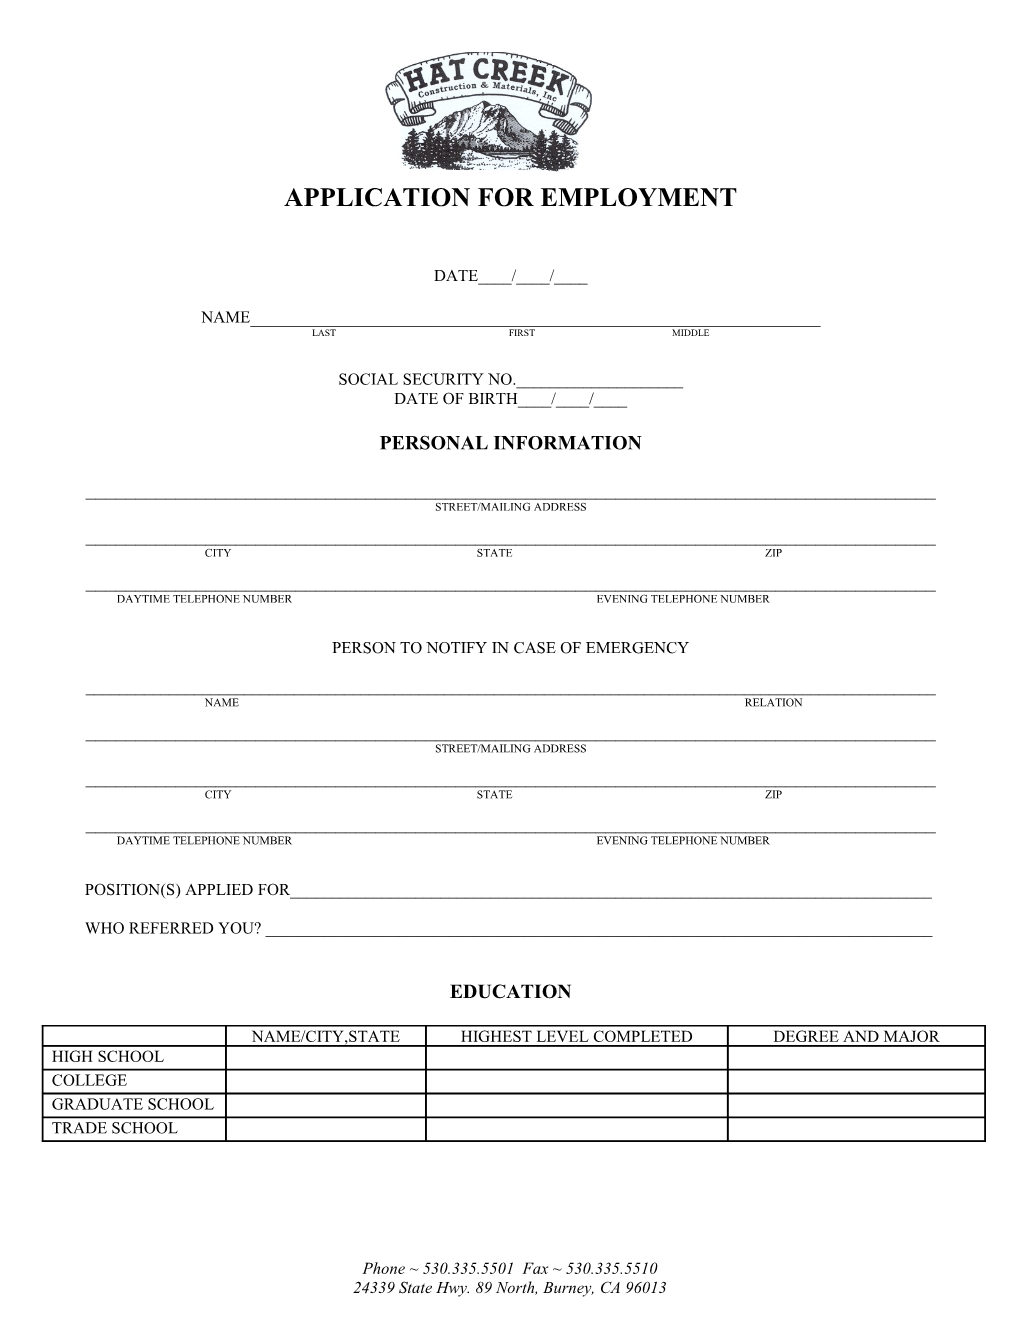 Hat Creek Construction & Materials, Inc. Application for Employment